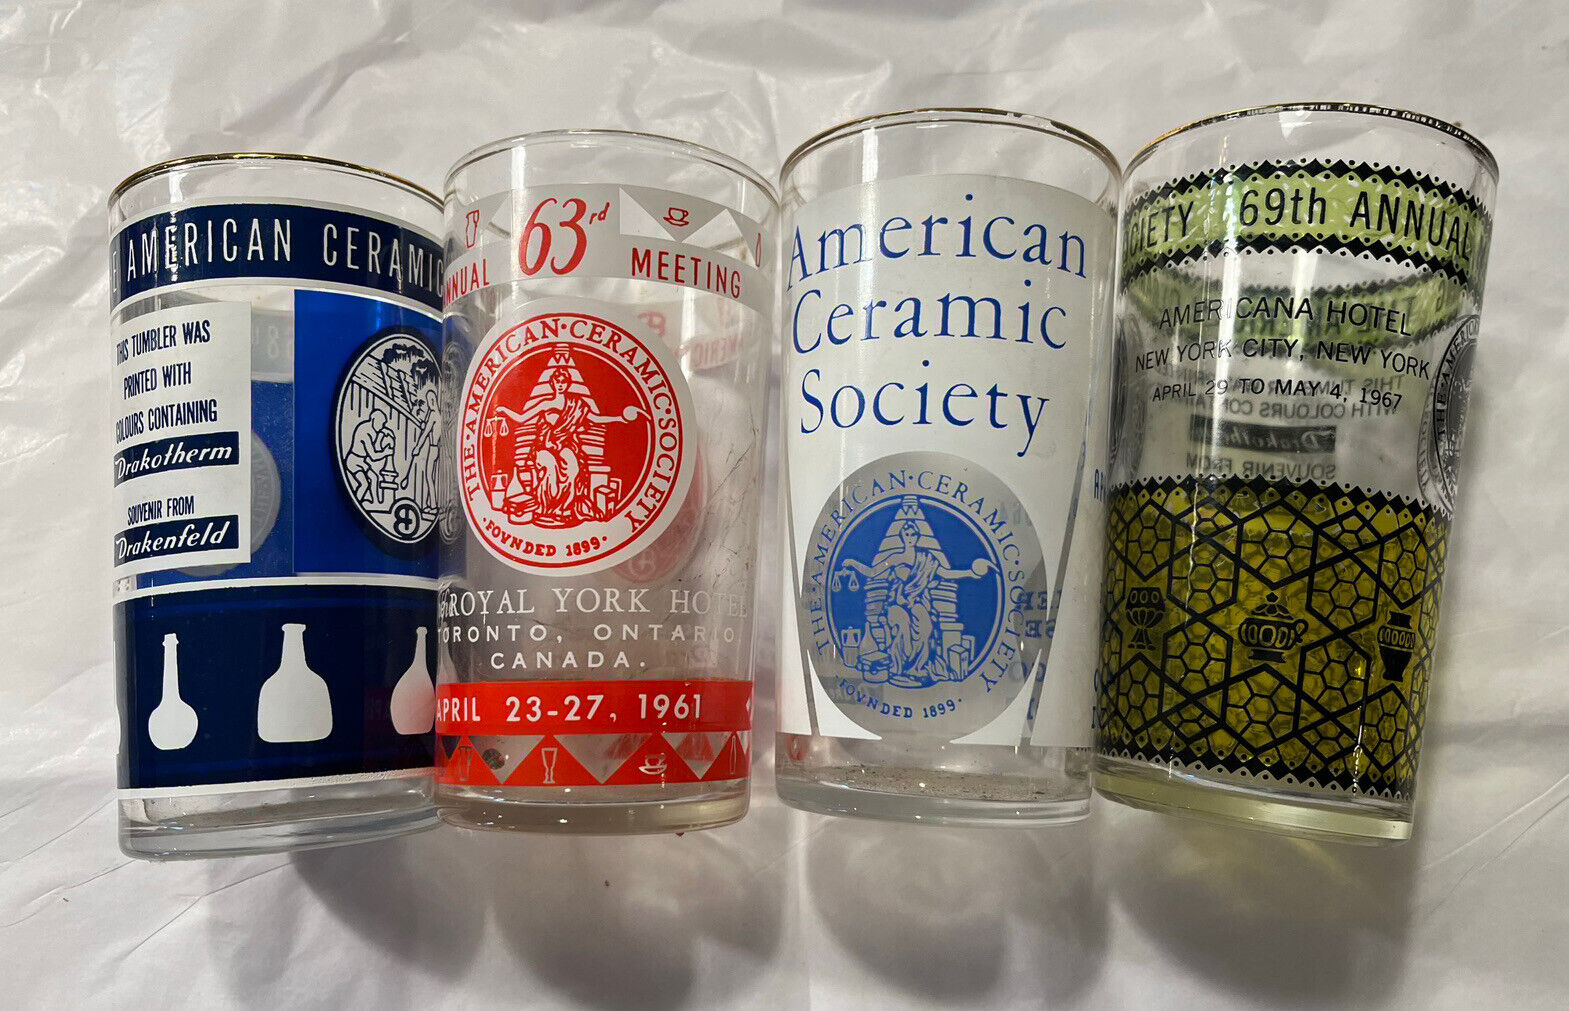 SET OF FOUR ANTIQUE GLASSES - 1960’s American Ceramic Society